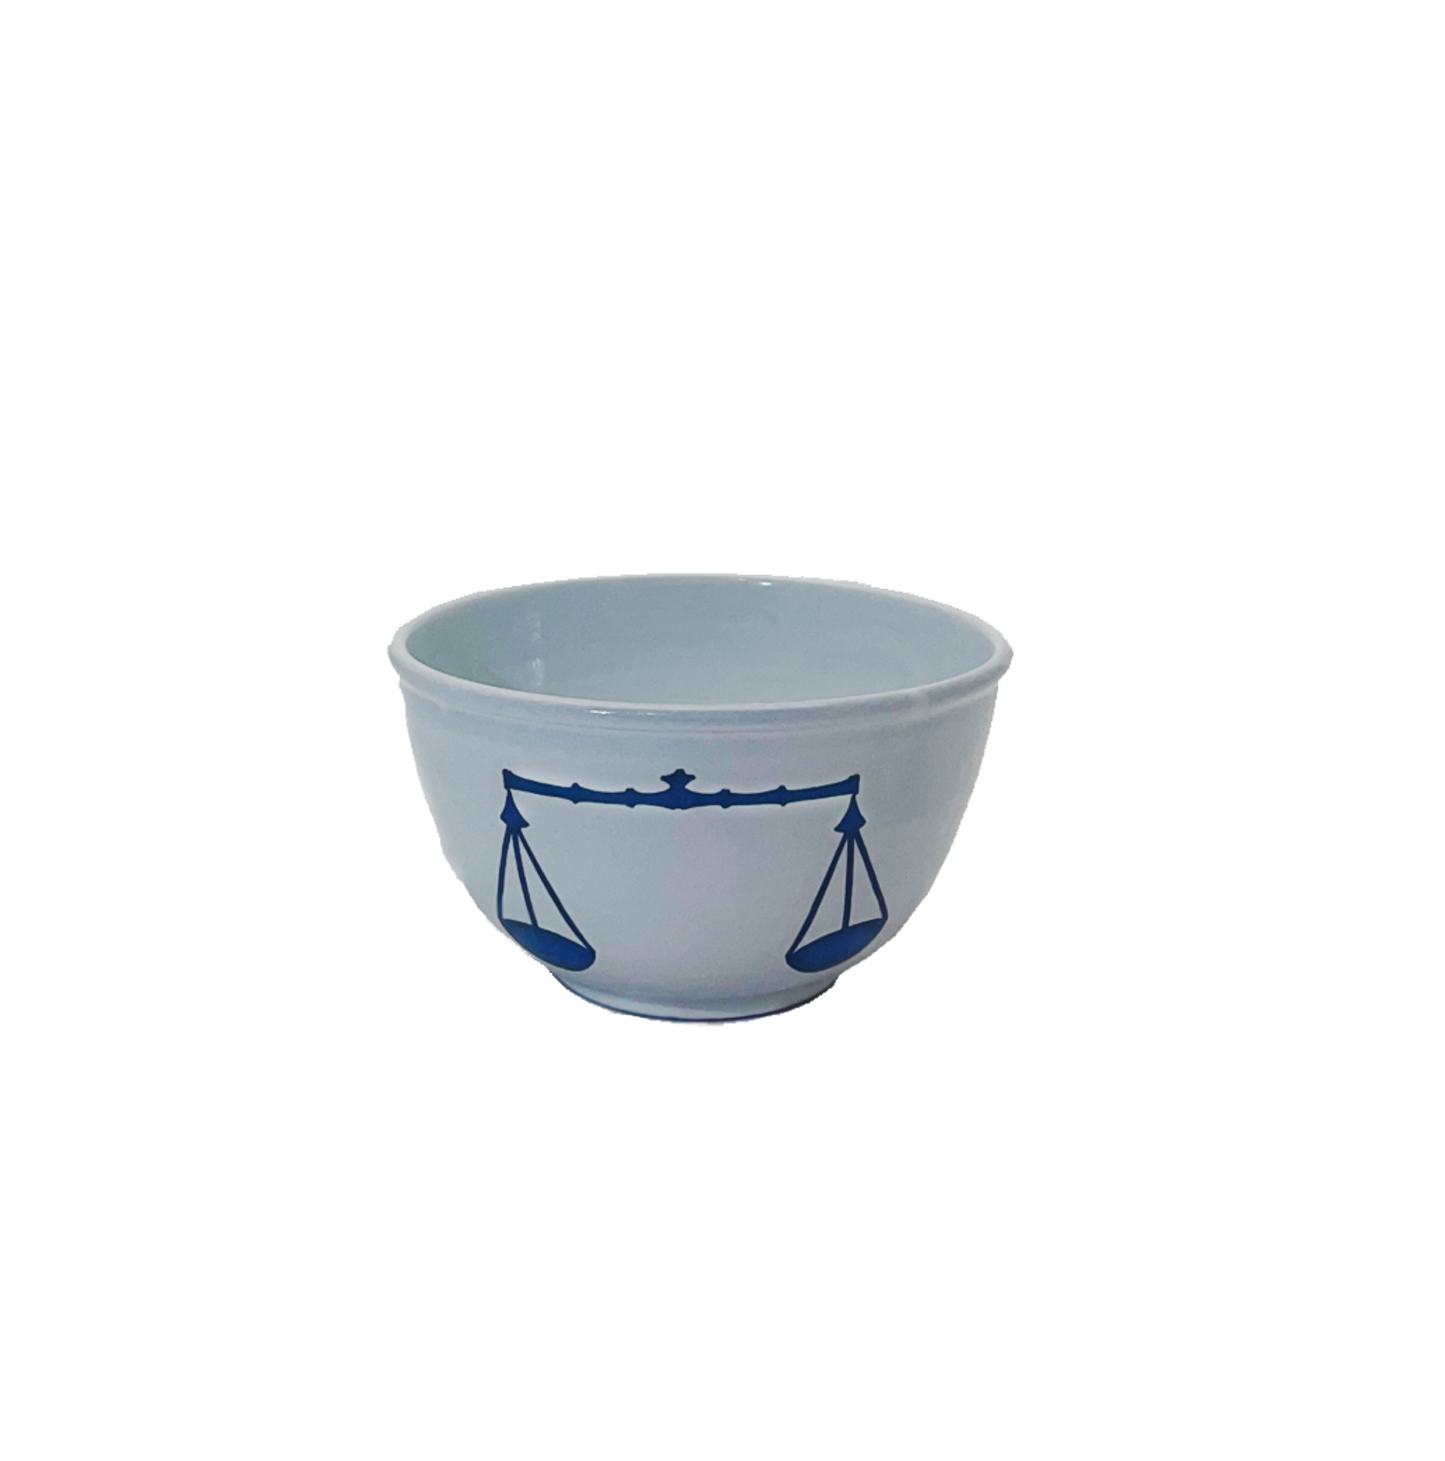 Libra ceramic bowl